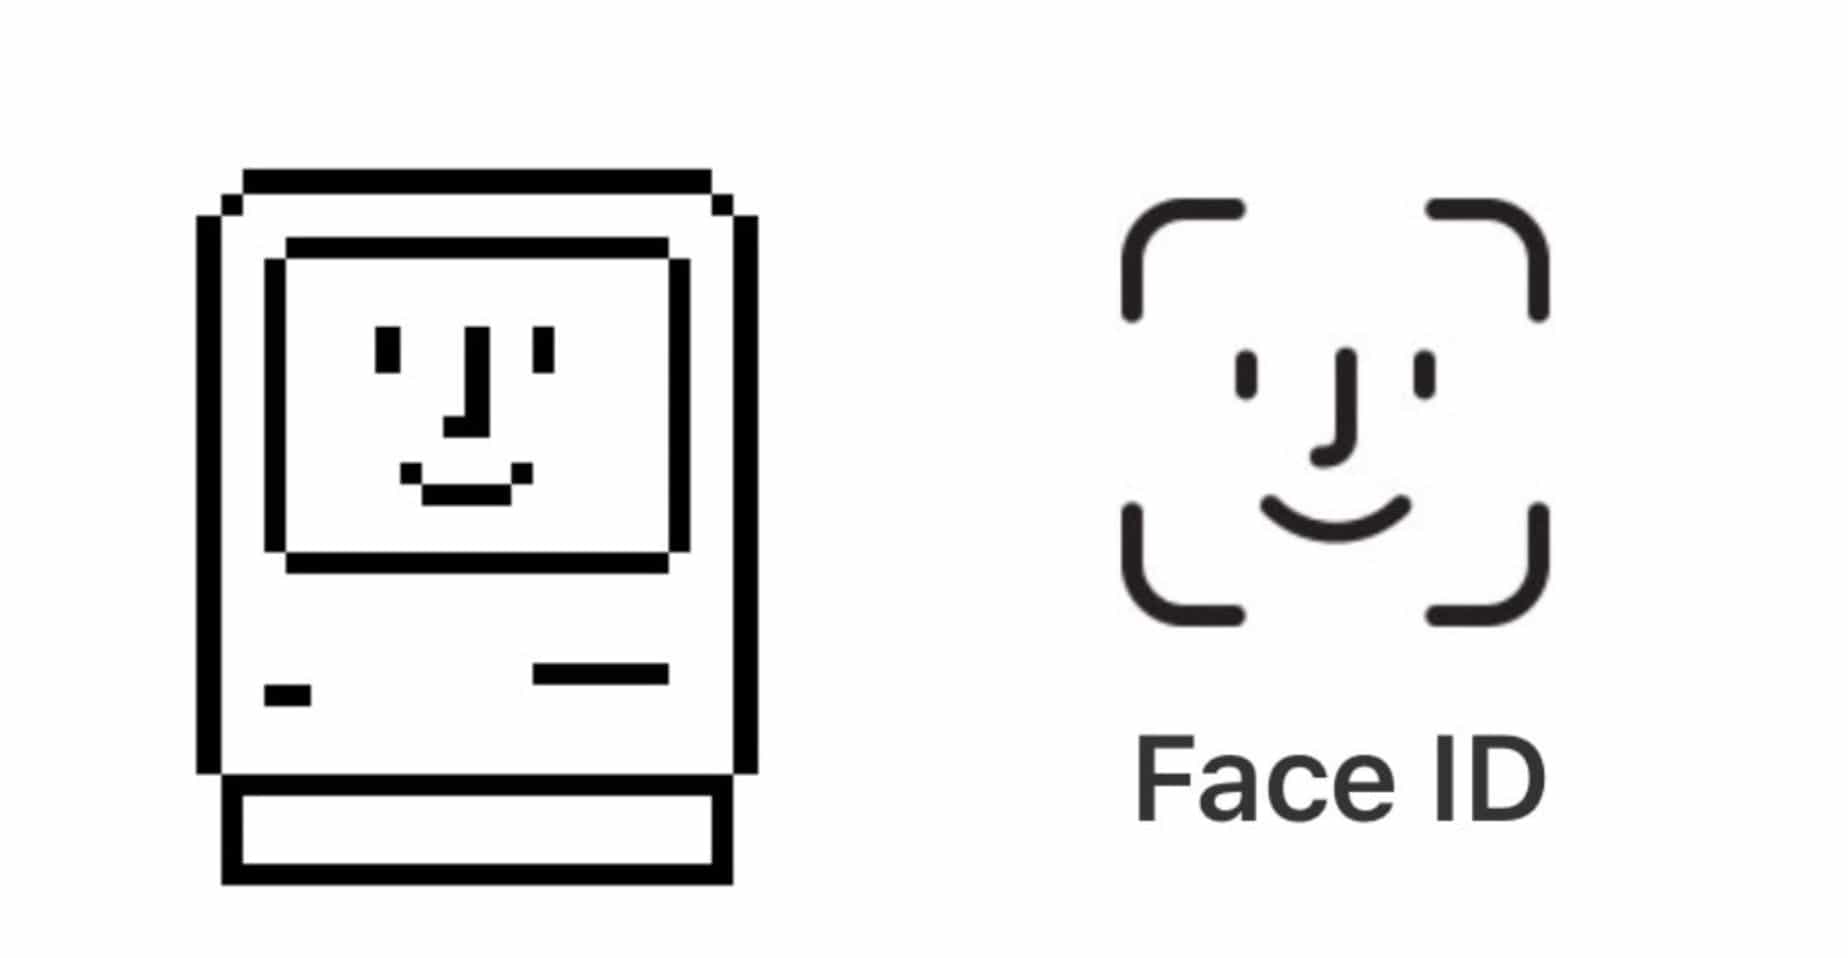 Apple Macintosh Logo - Face ID logo resurrects a classic Macintosh icon | Cult of Mac